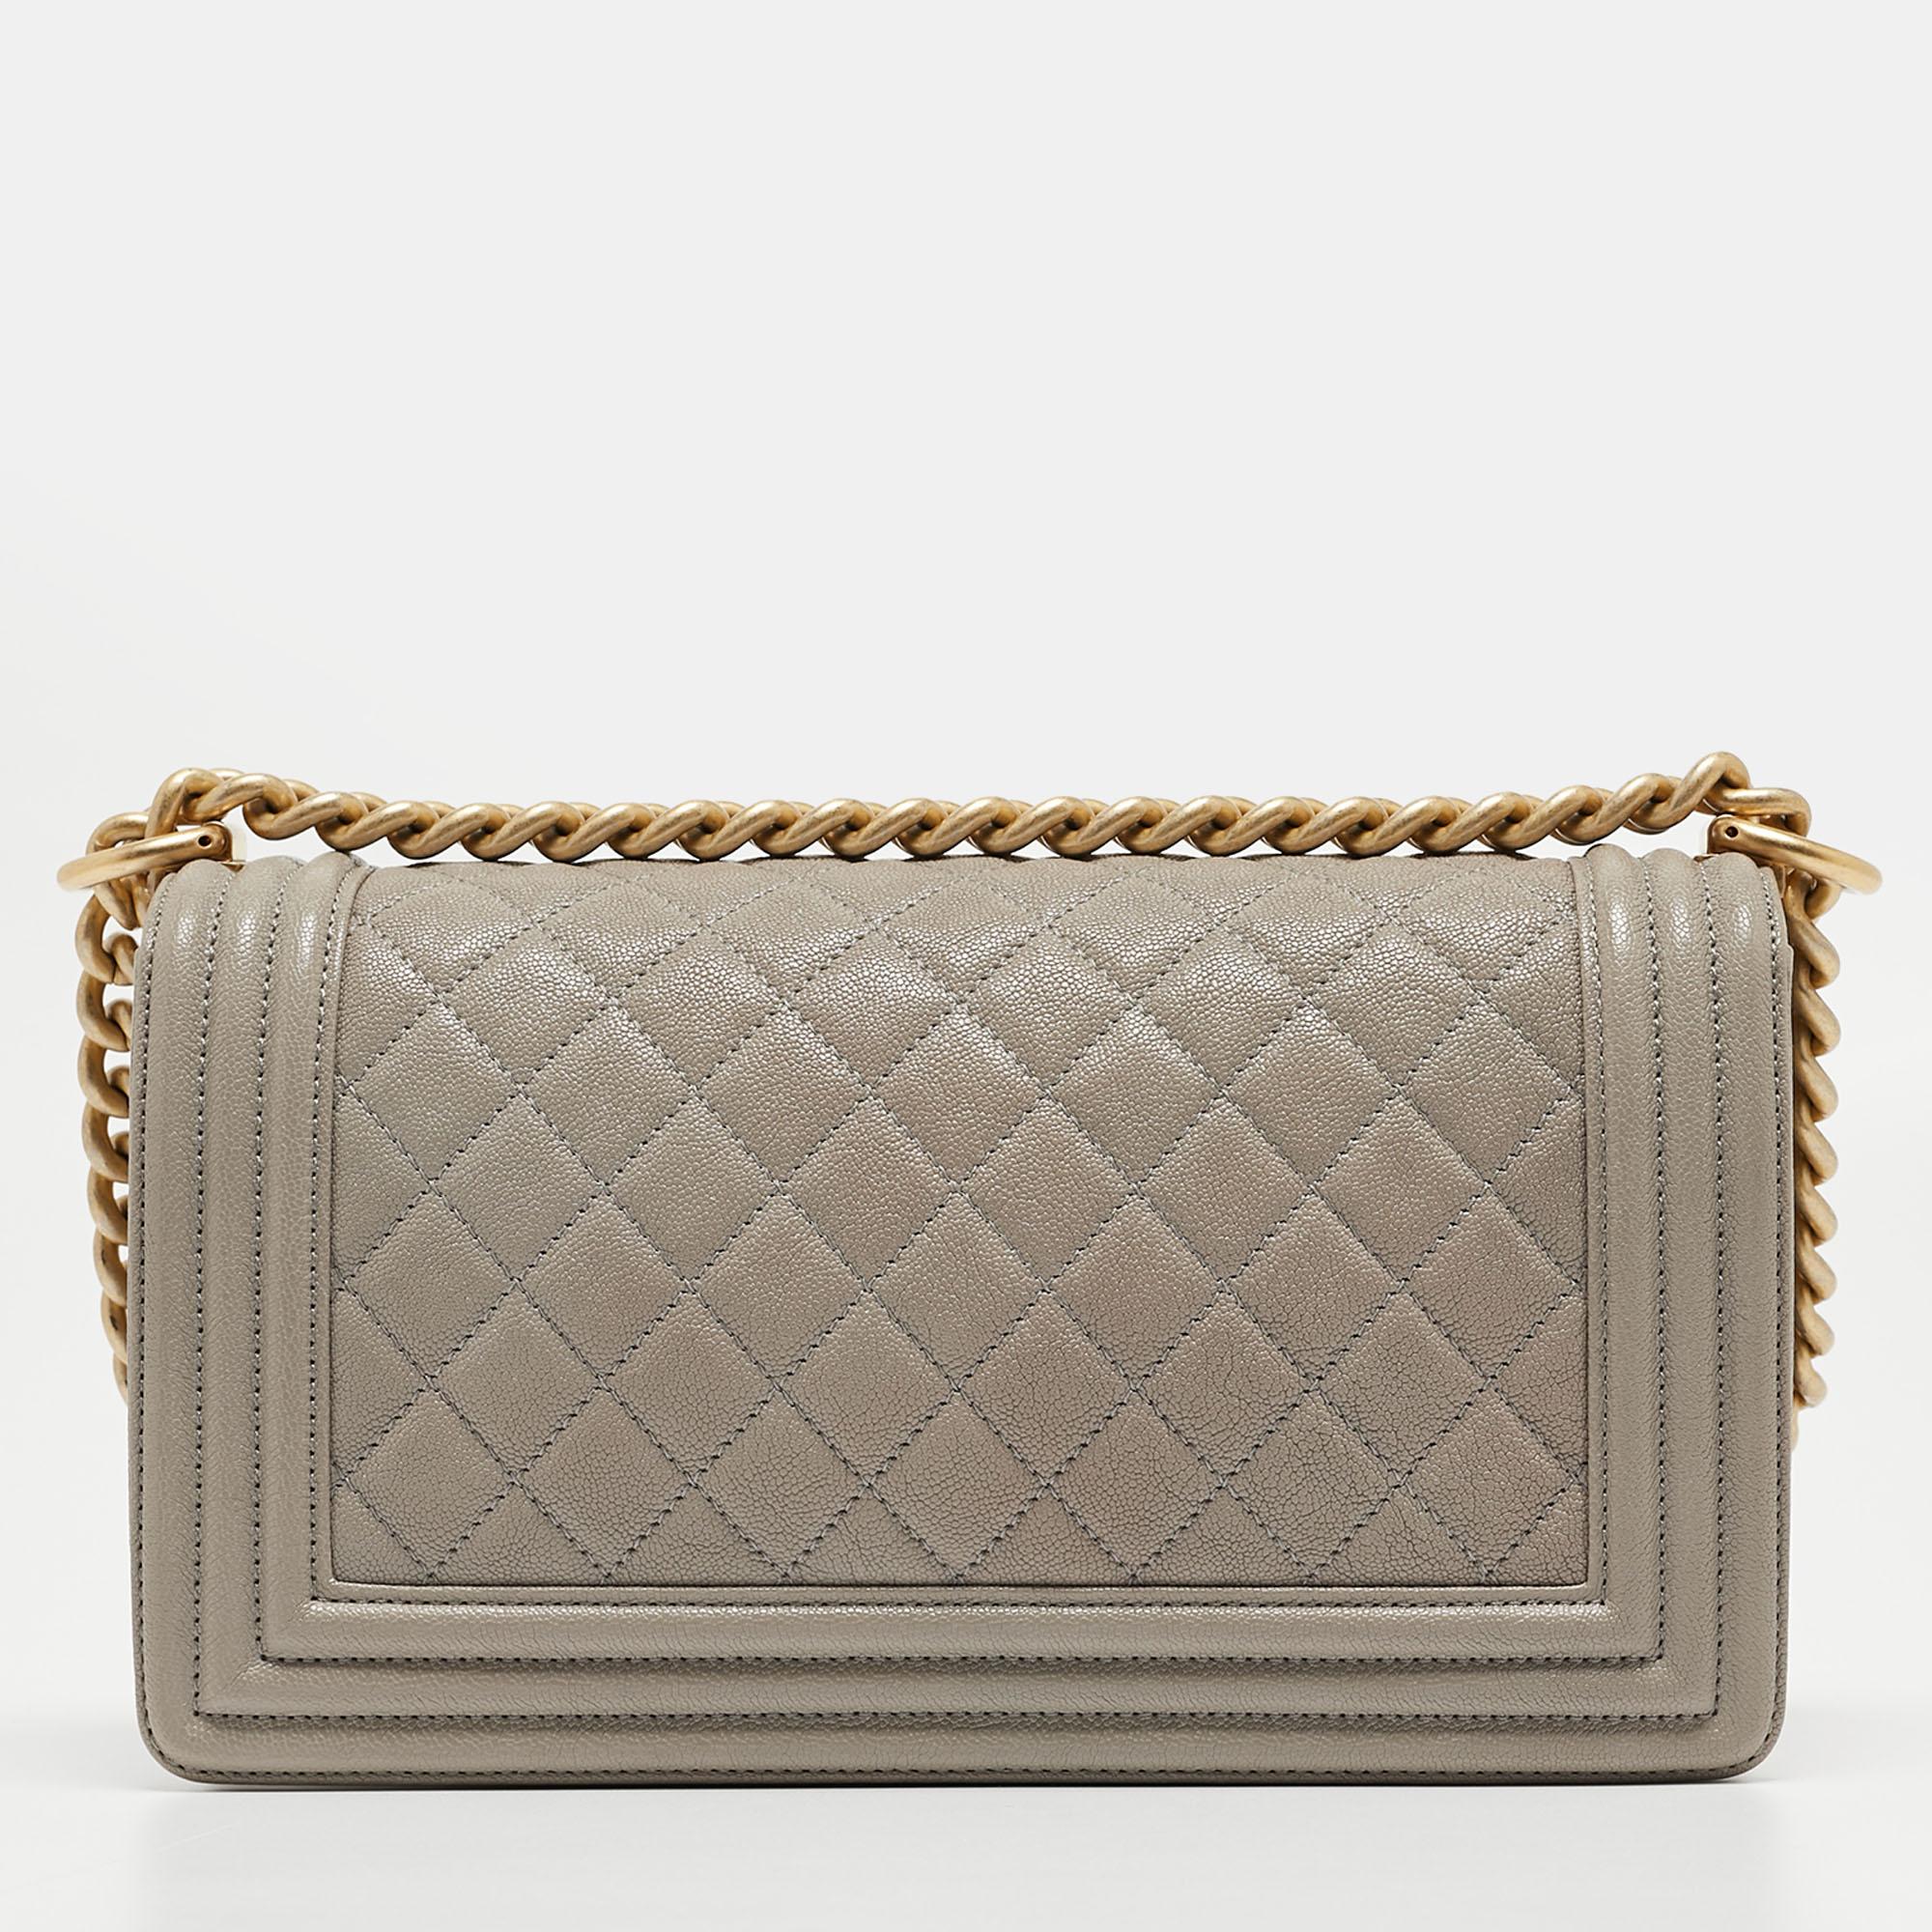 Chanel Grey Quilted Caviar Leather Medium Boy Flap Bag 11